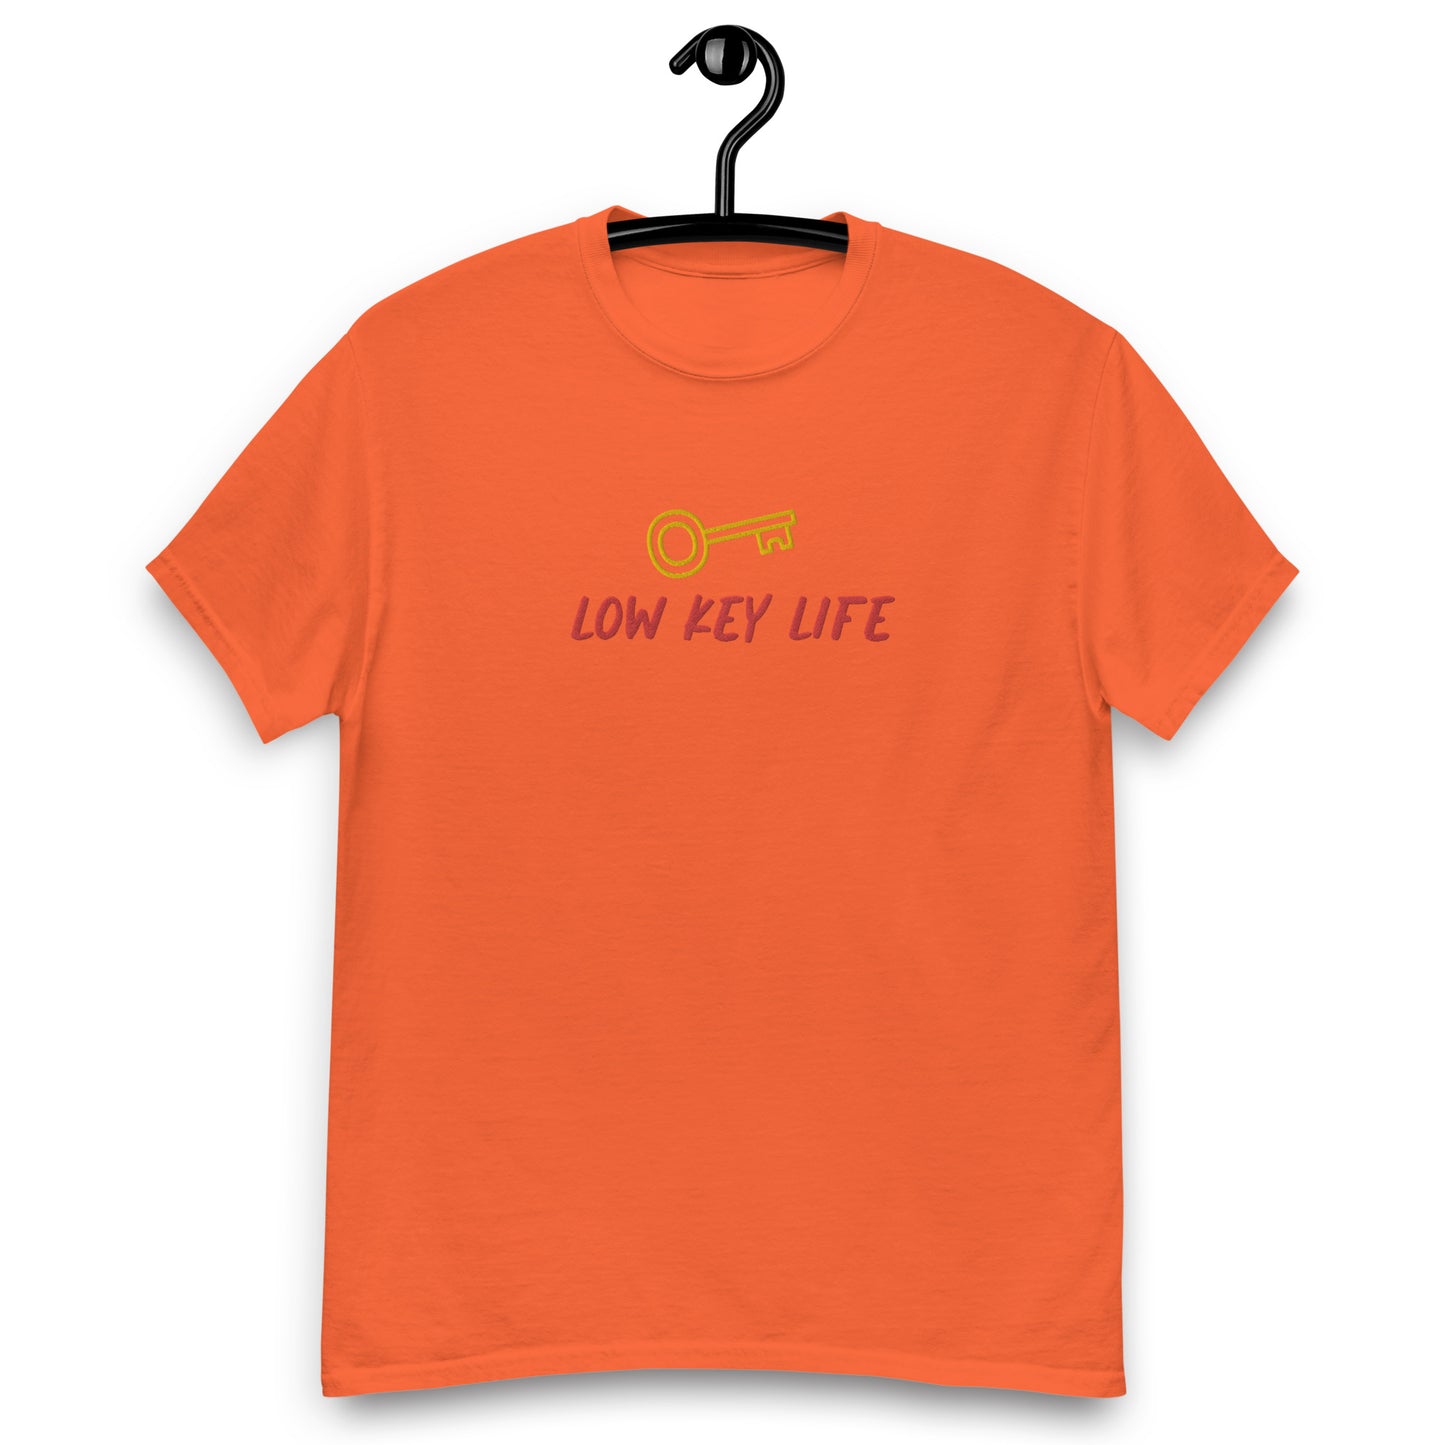 "Low key life" men's t-shirt